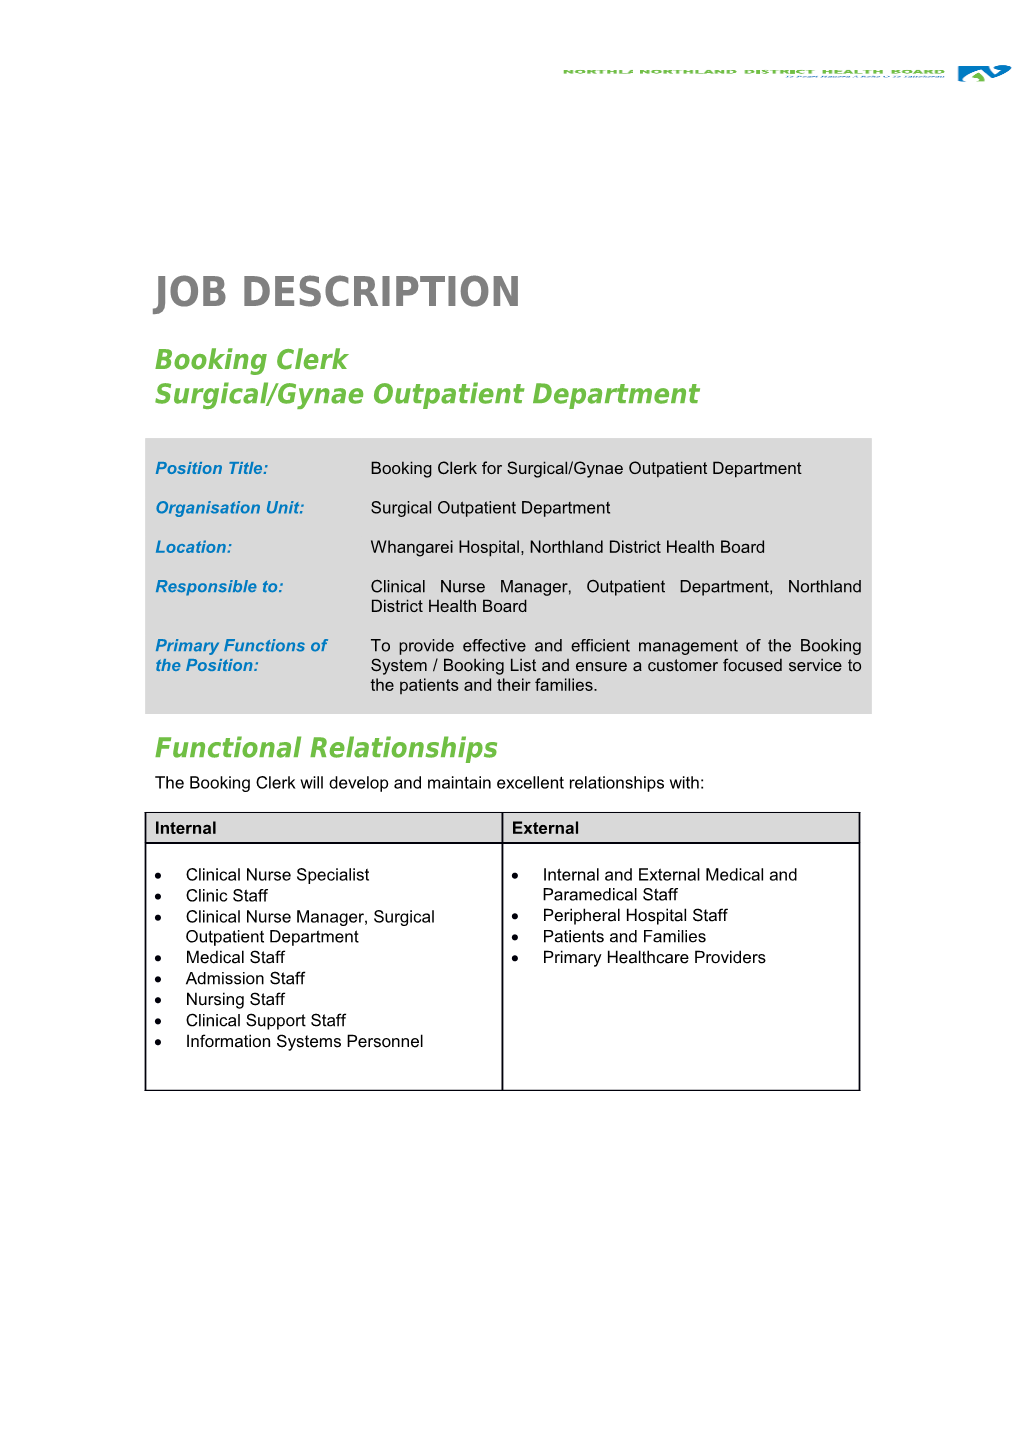 Surgical/Gynaeoutpatient Department